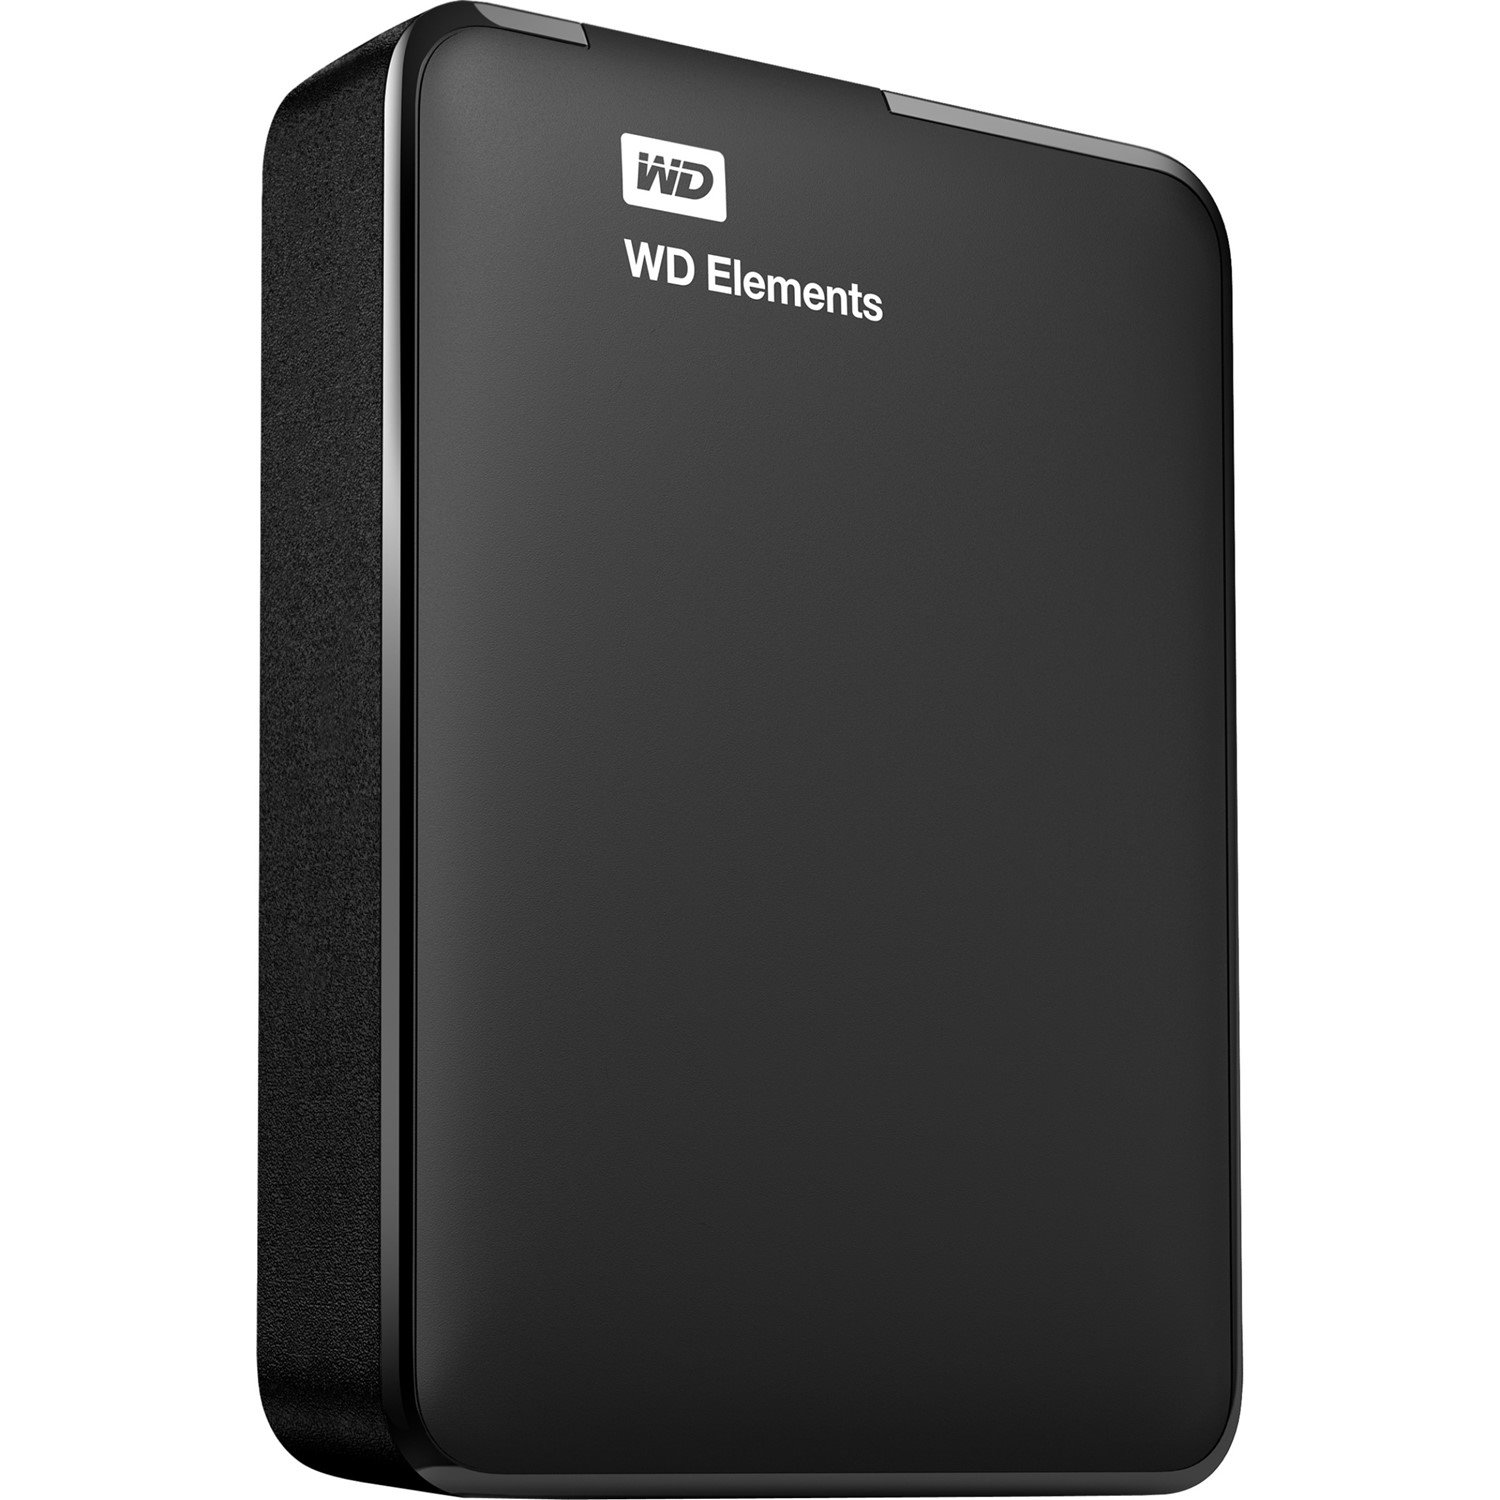 wd 2tb elements portable external hard drive - usb 3.0 - for mac